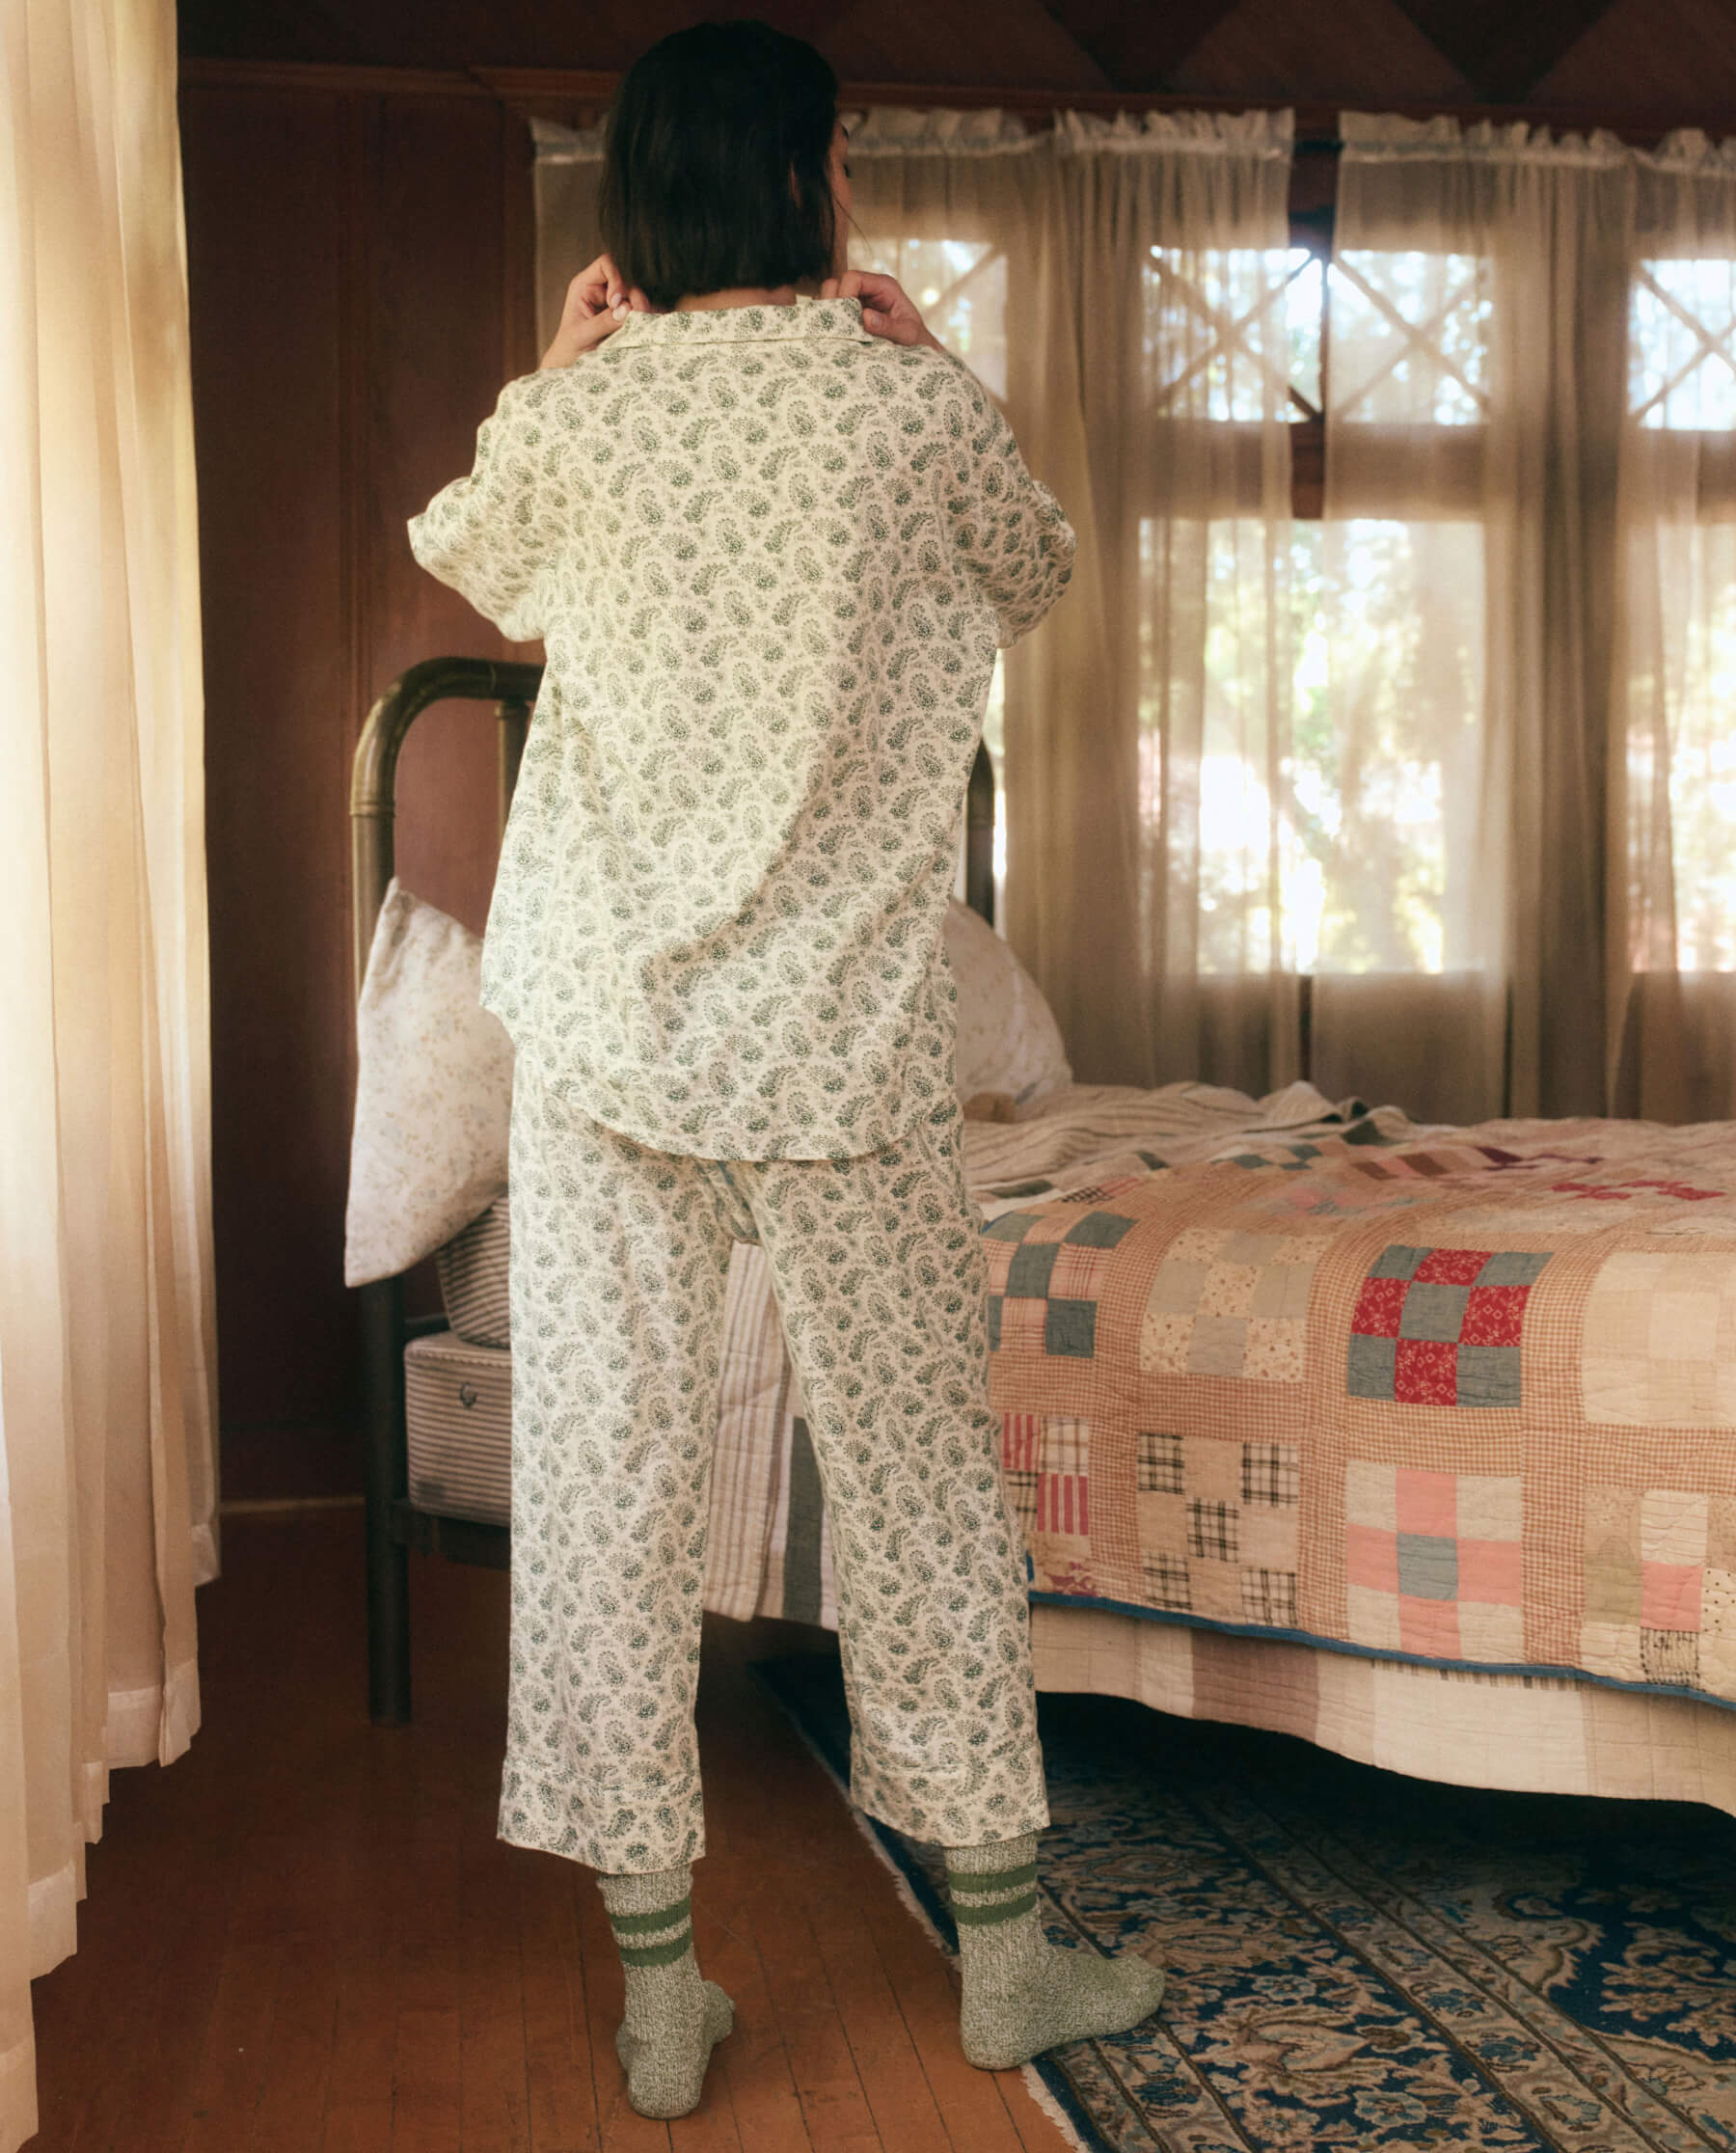 The Pajama Top. -- Washed White with Pine Vintage Paisley SLEEP TOP THE GREAT. HOL 23 SLEEP SALE